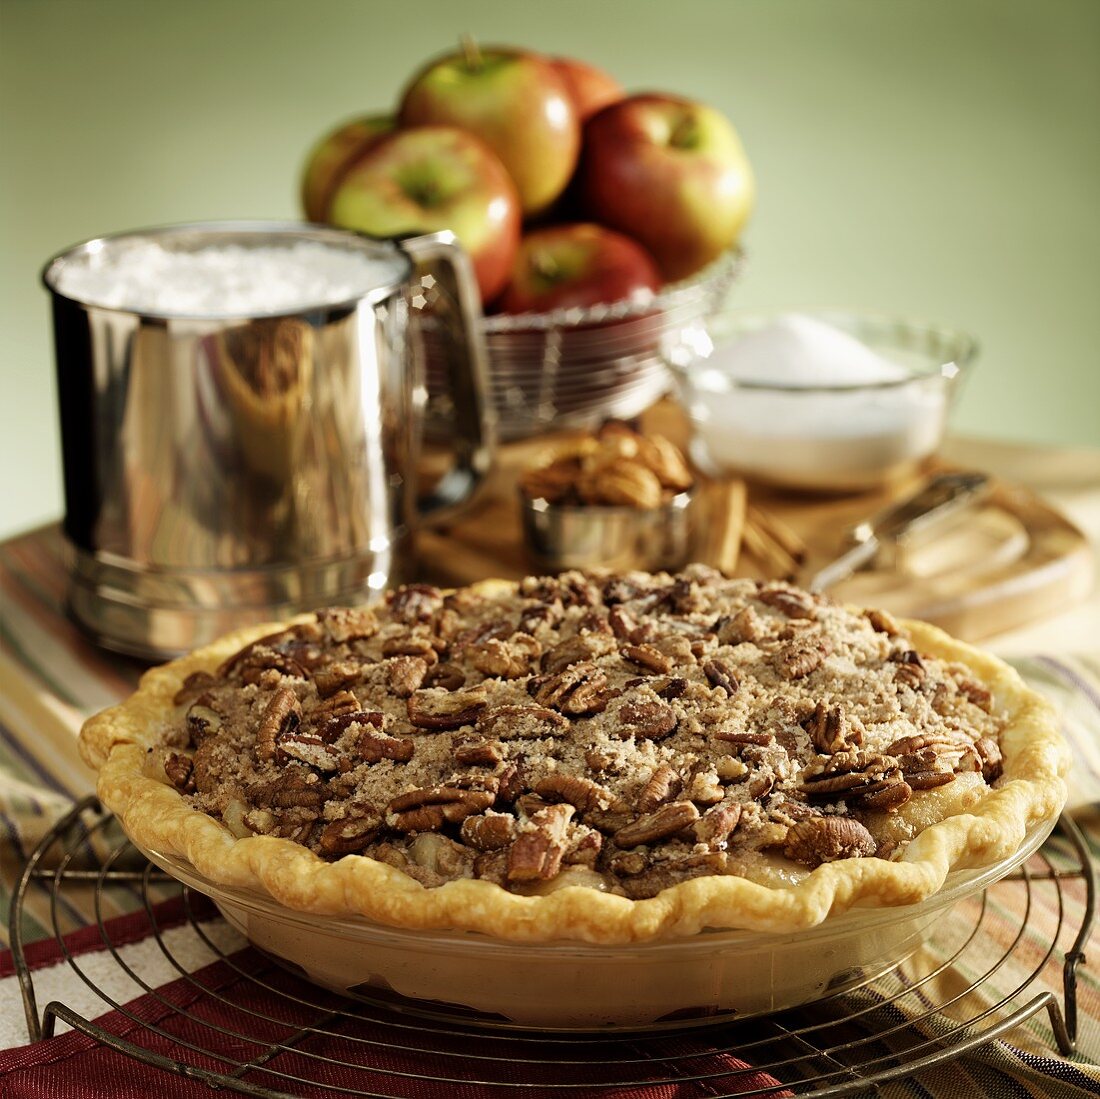 Whole apple & pecan pie; baking ingredients in background